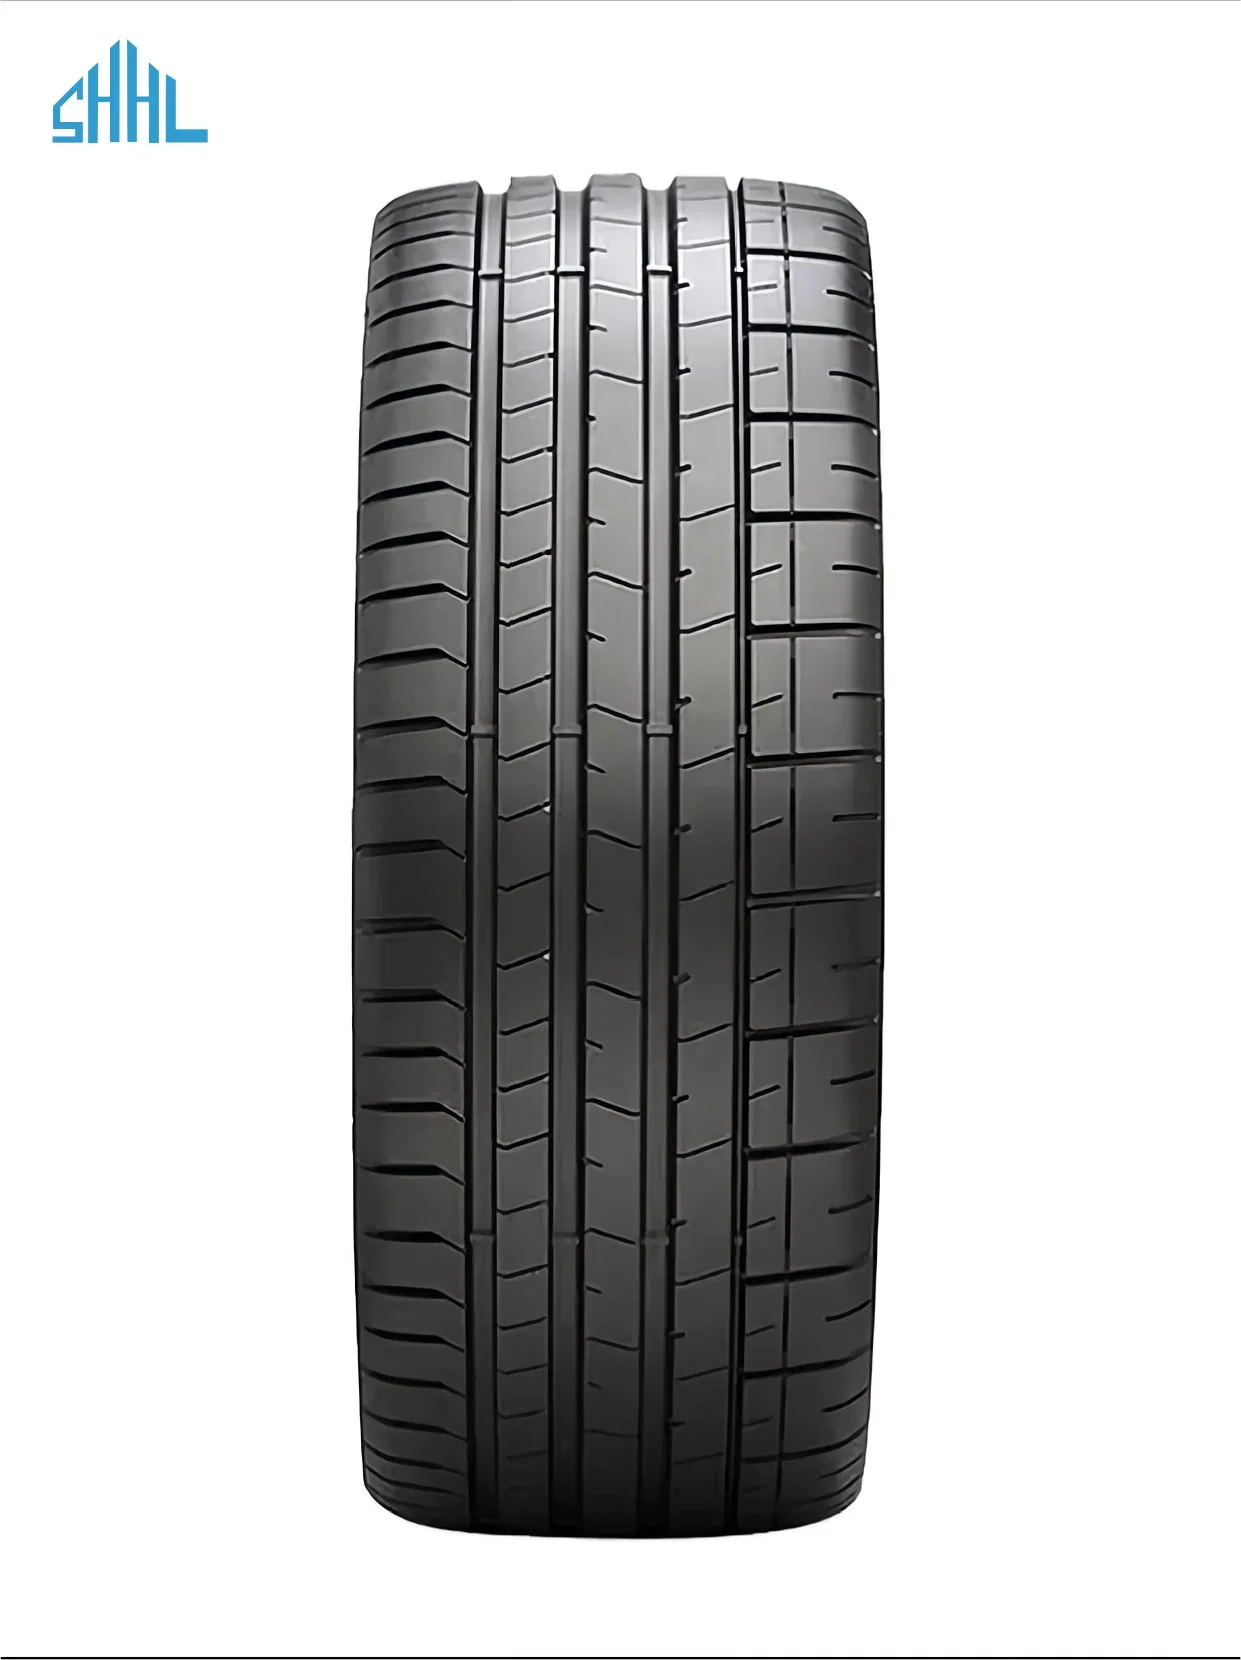 Chinse Factory TBR PCR Car Tyres 6.50-16-8pr 6.50-20-6pr 7.50-16-8pr 7.50-16-8 Radial Tires off Road Tyres Truck Tires